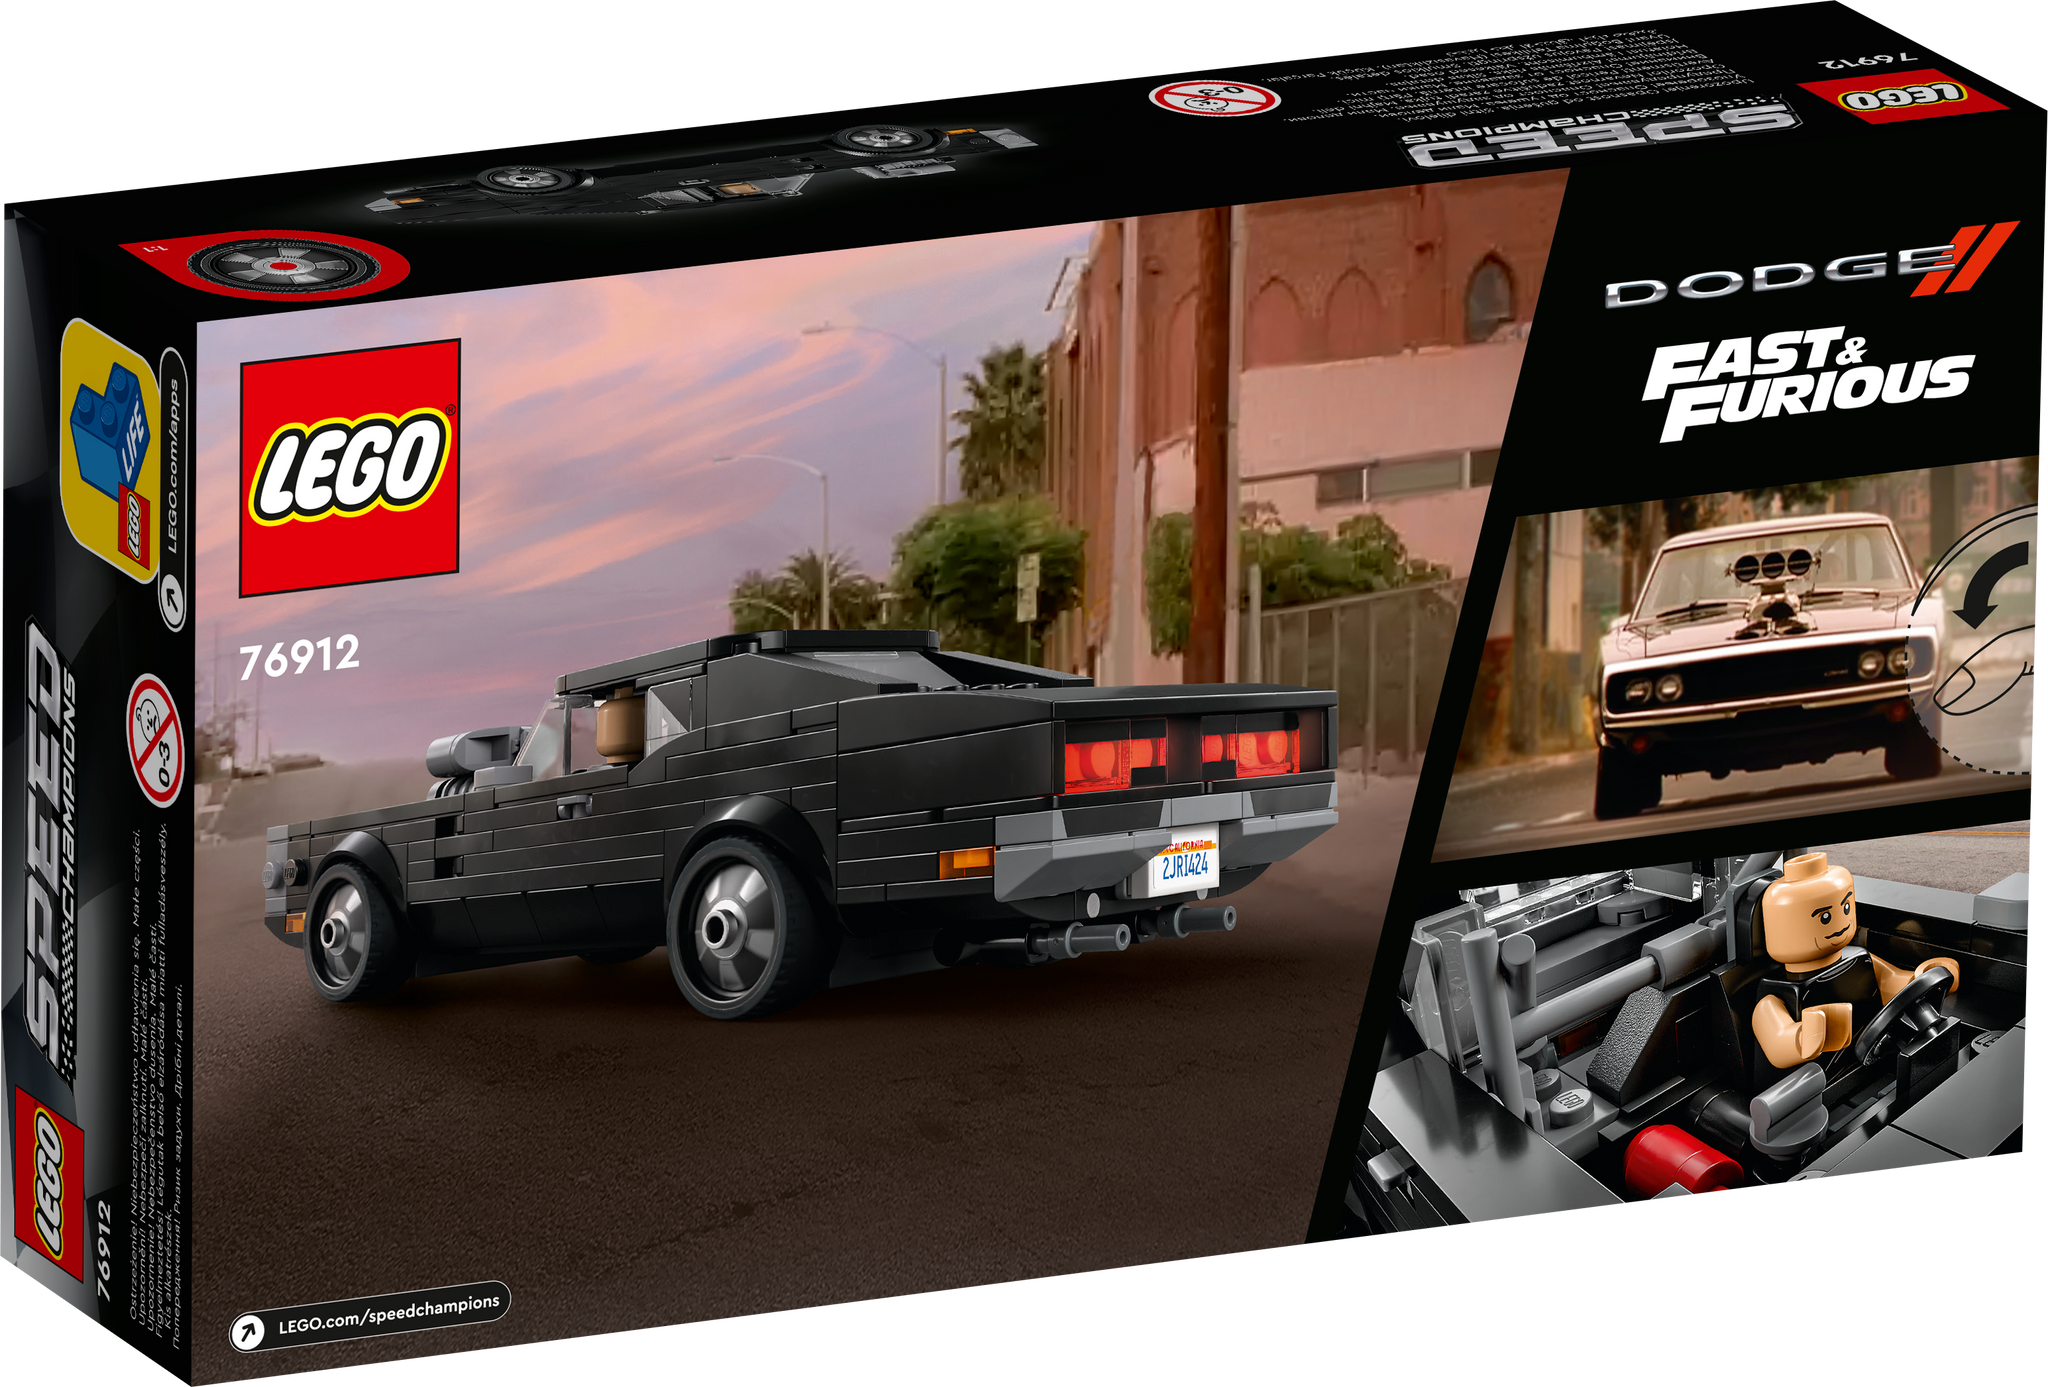 L E G O Fast Furious Dodge Charger Set76912